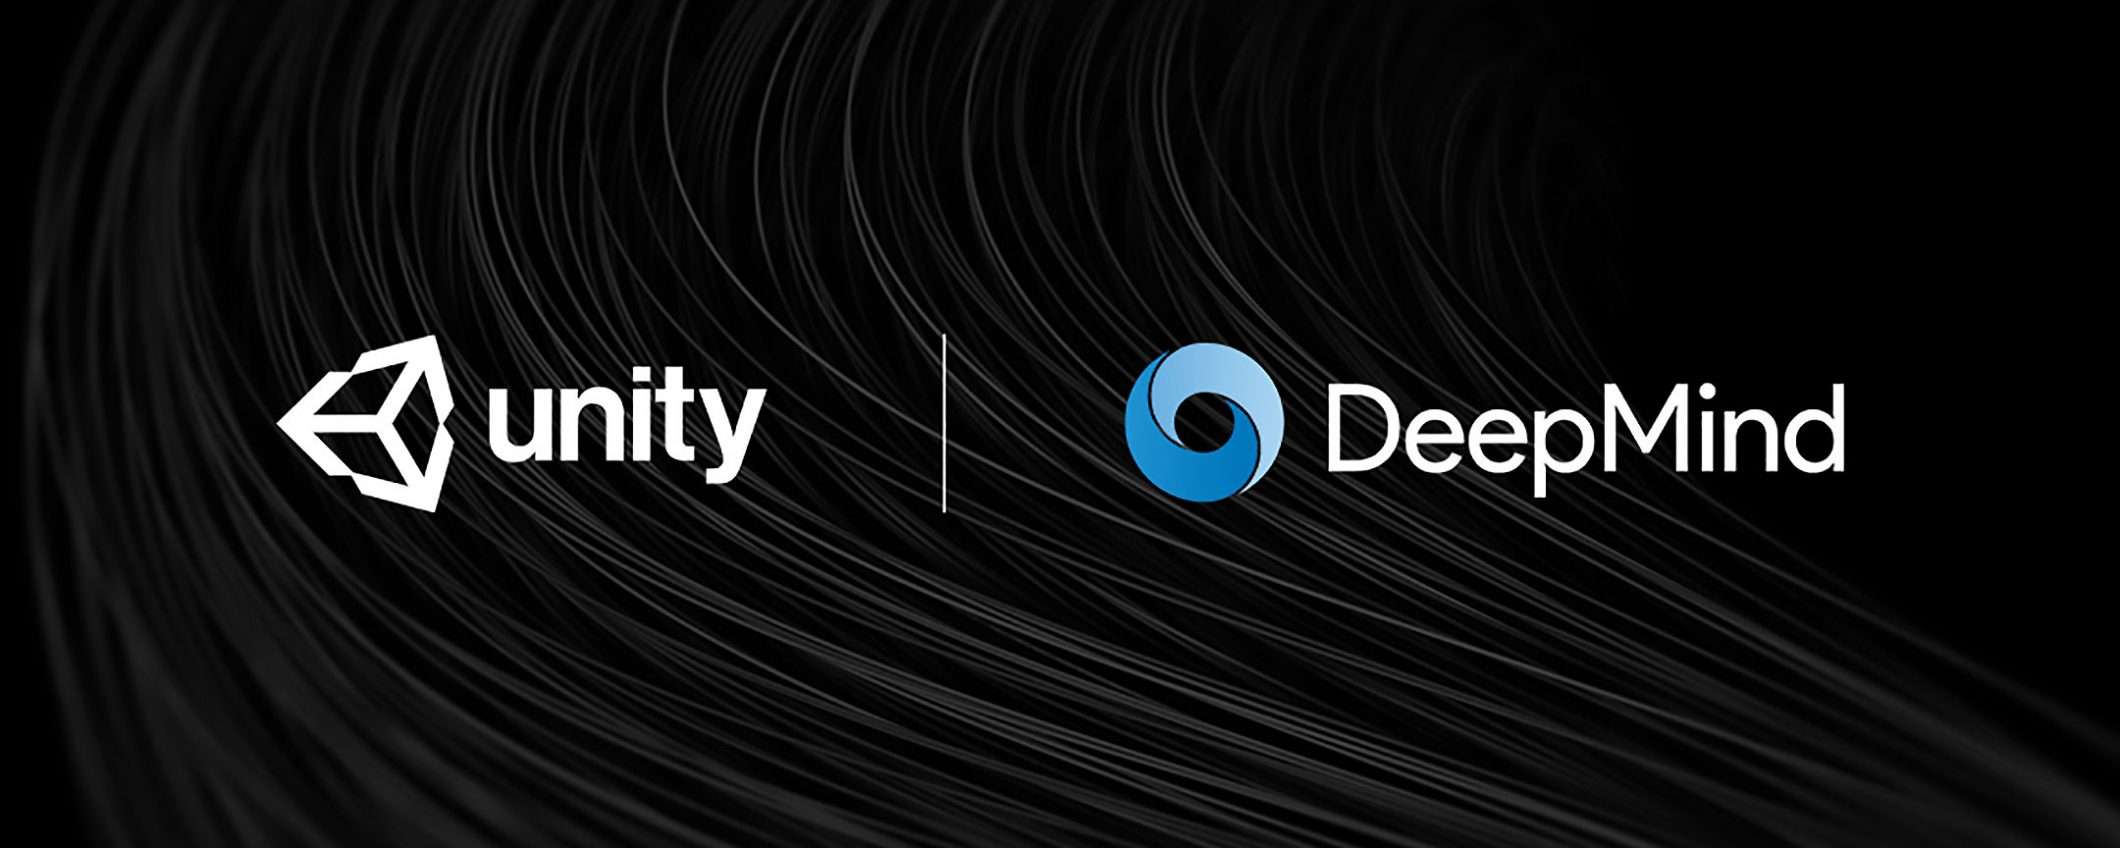 DeepMind e Unity insieme per la ricerca sull'IA